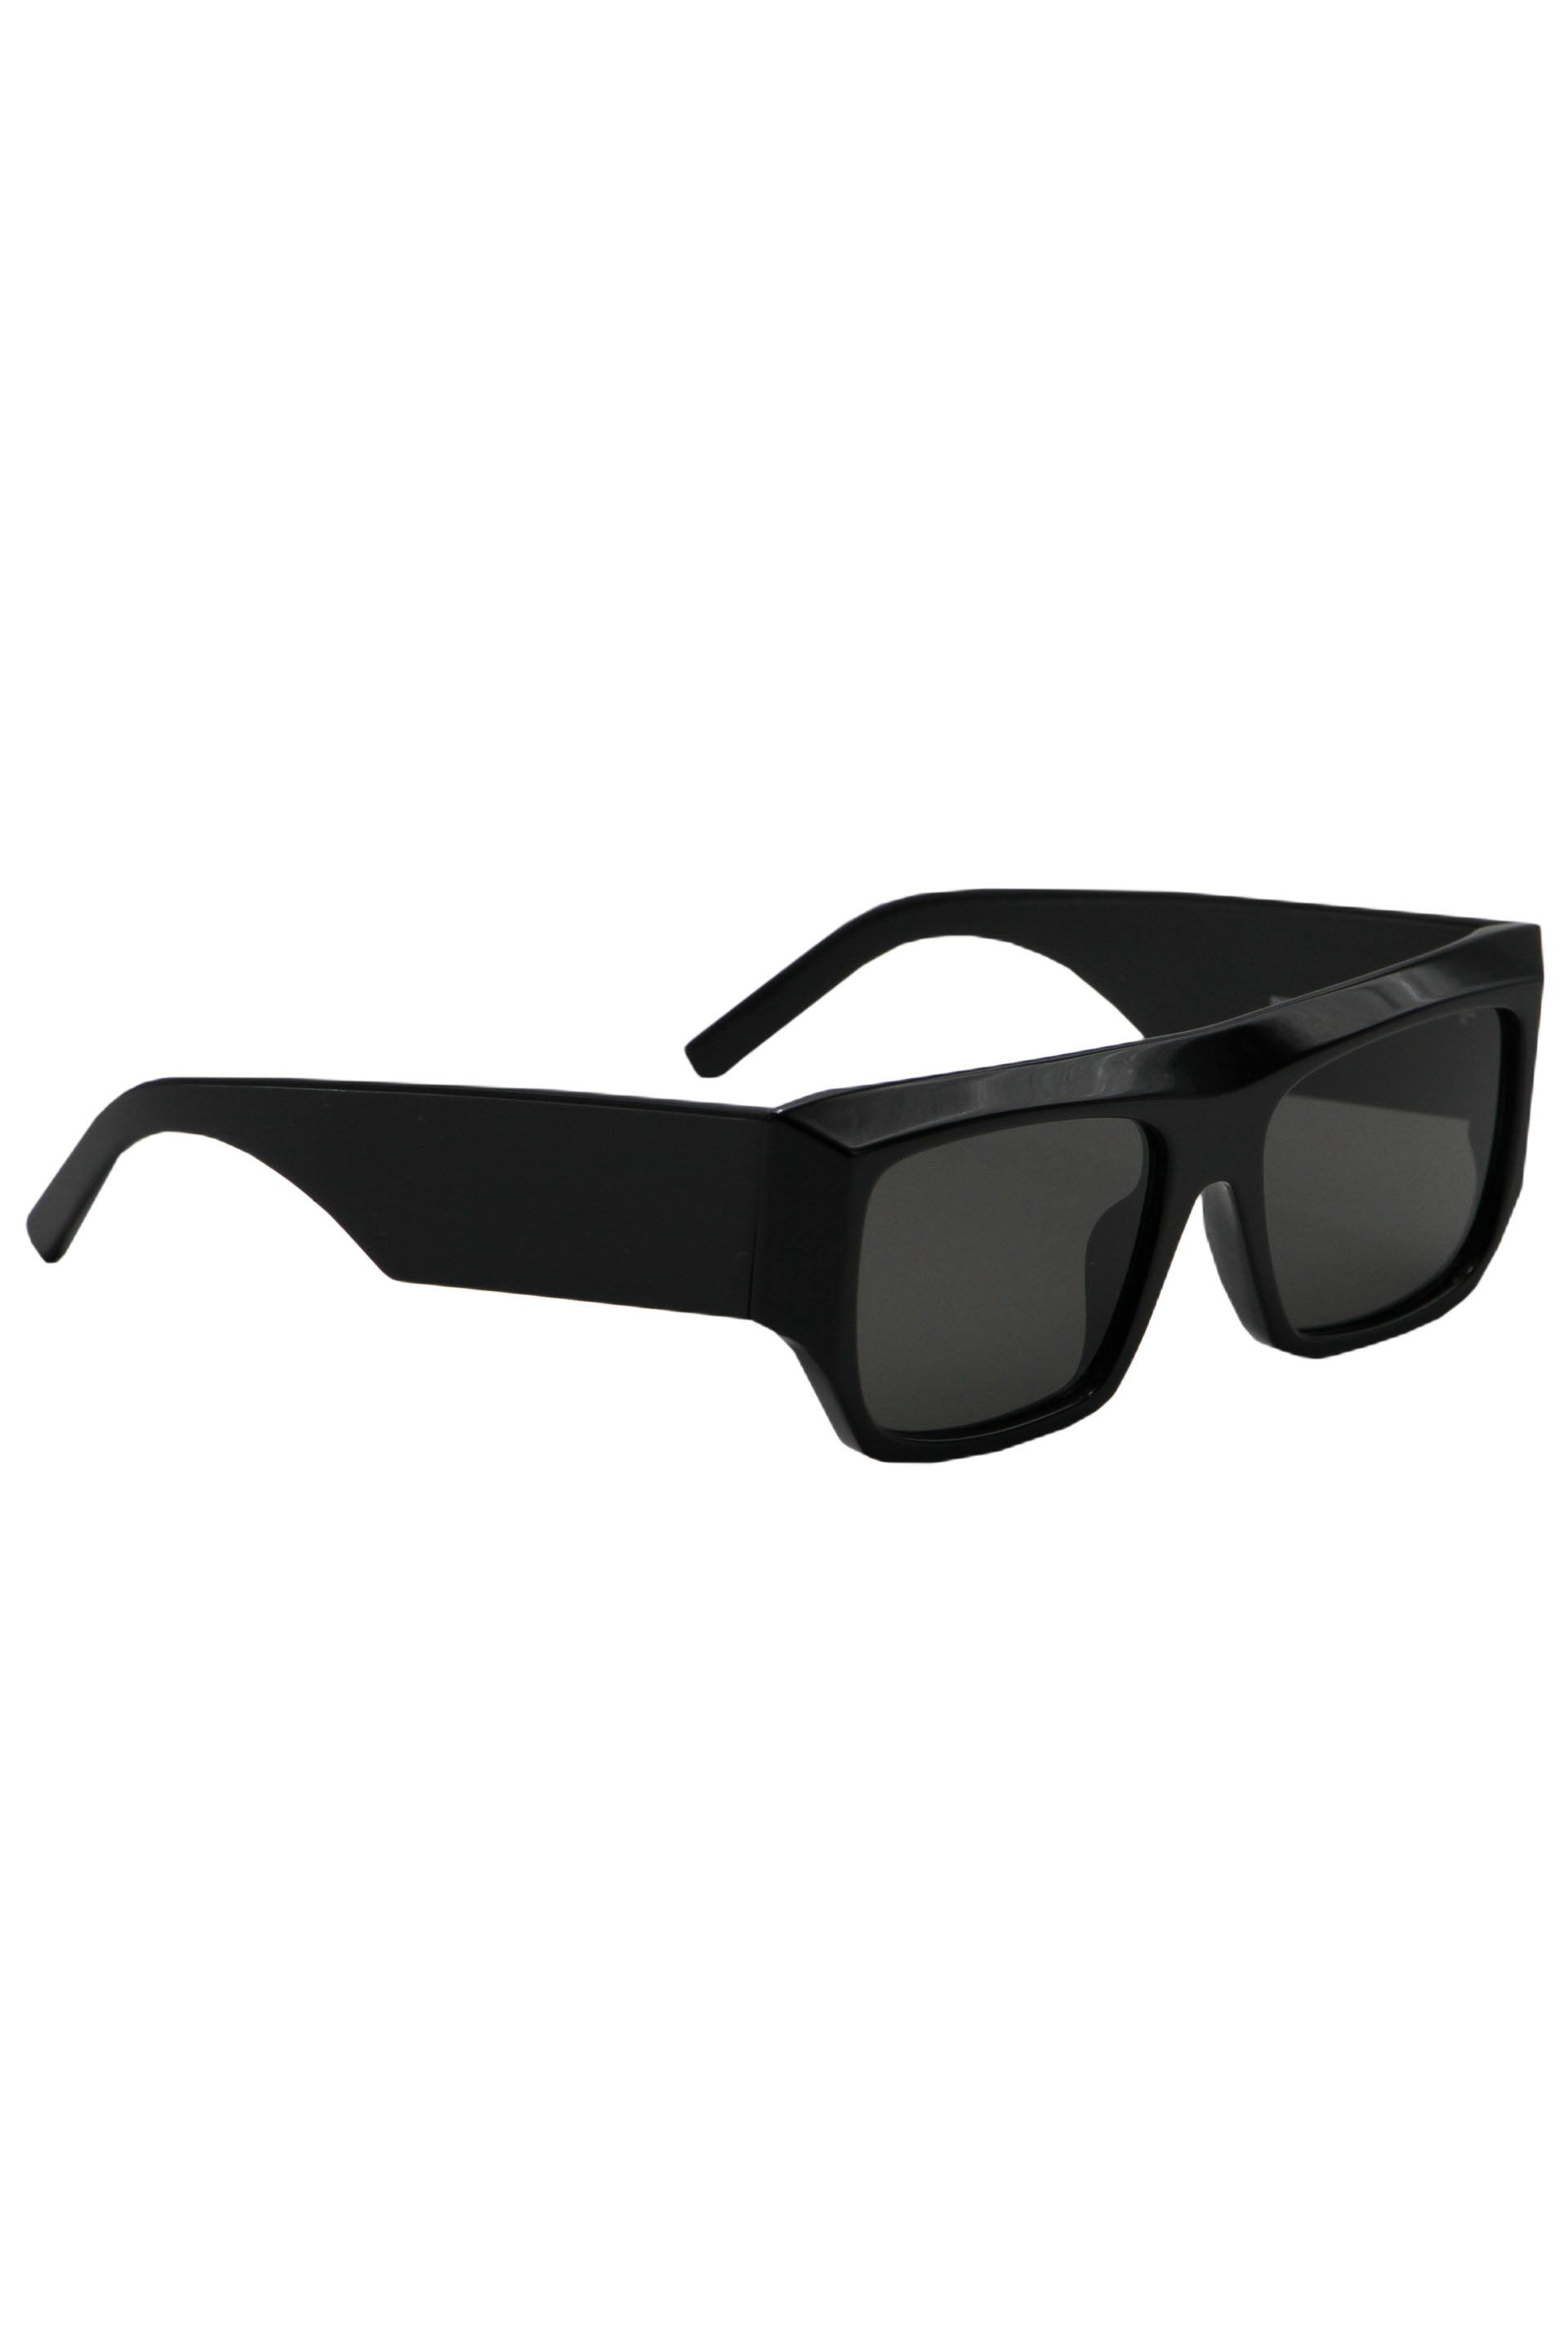 Blanca rectangular frame sunglasses